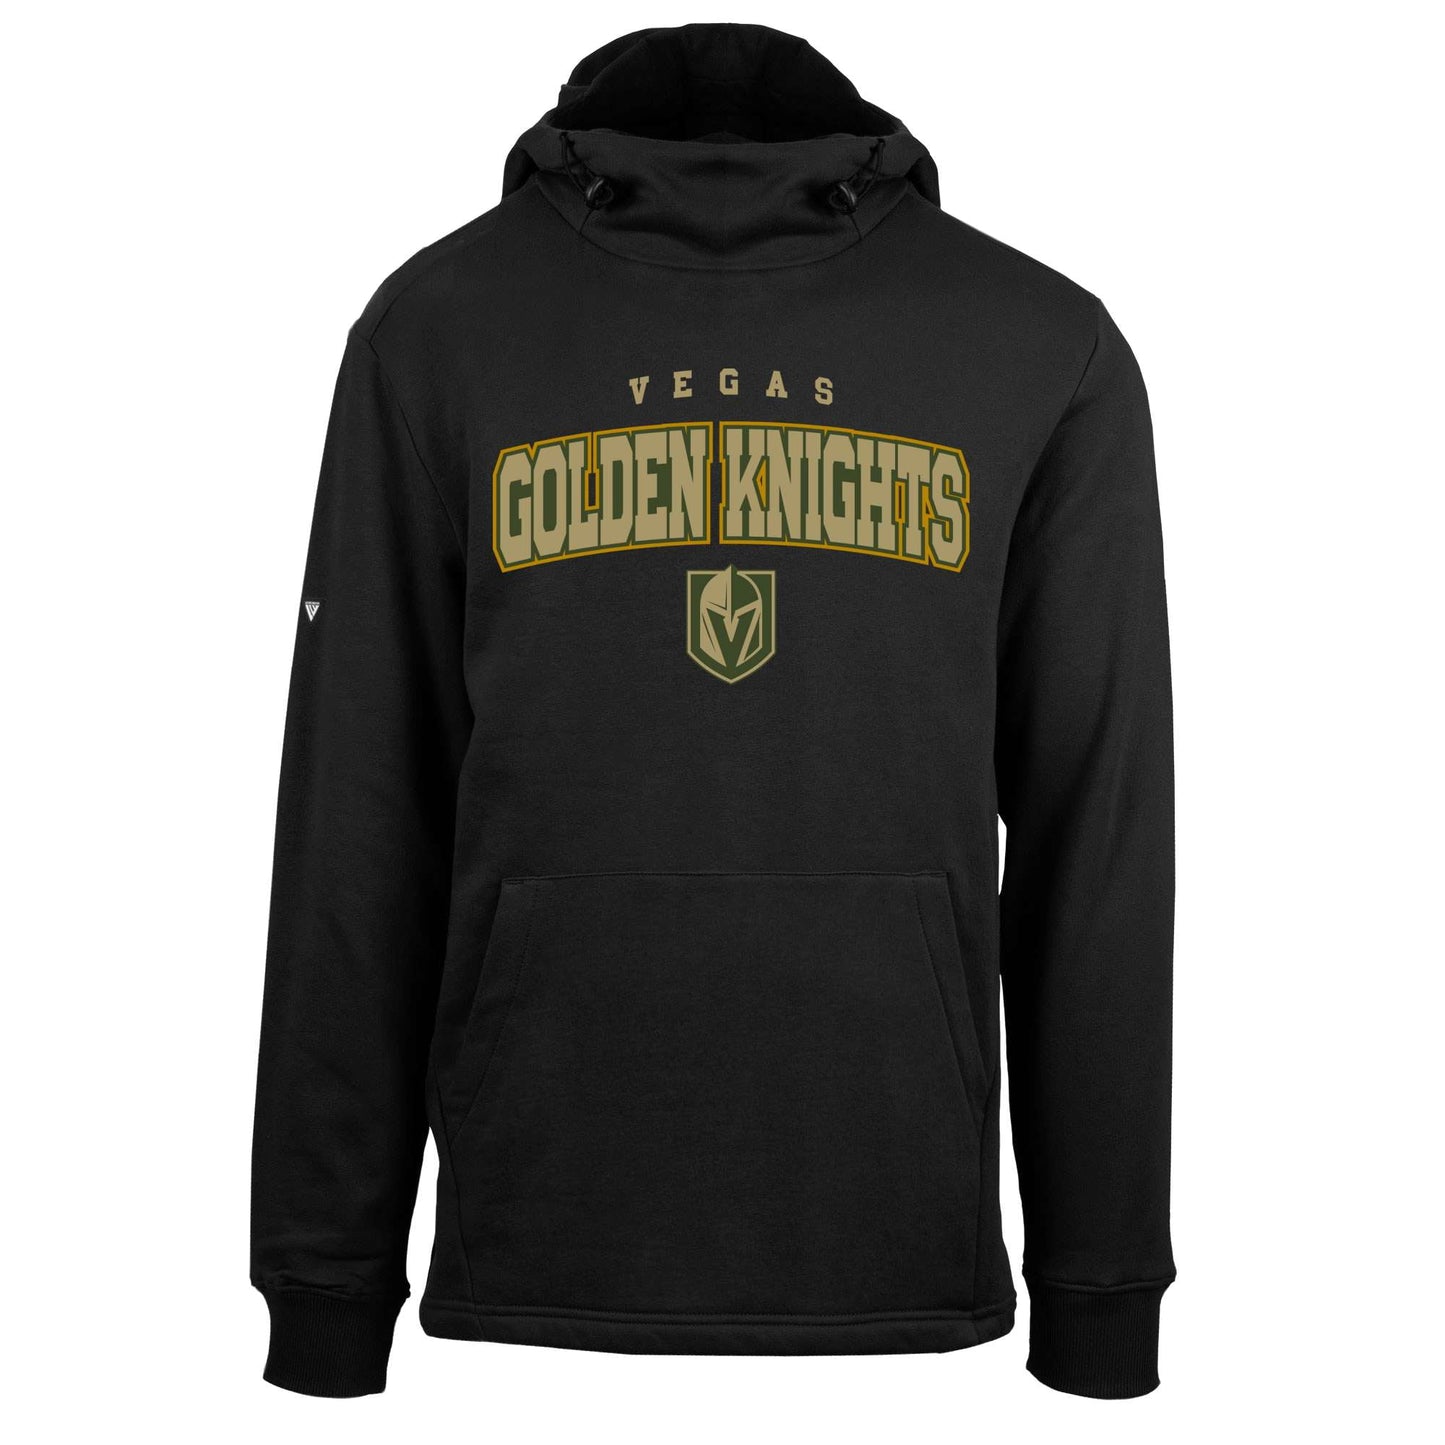 Men's Levelwear Black Vegas Golden Knights Arch Delta Shift Pullover Hoodie